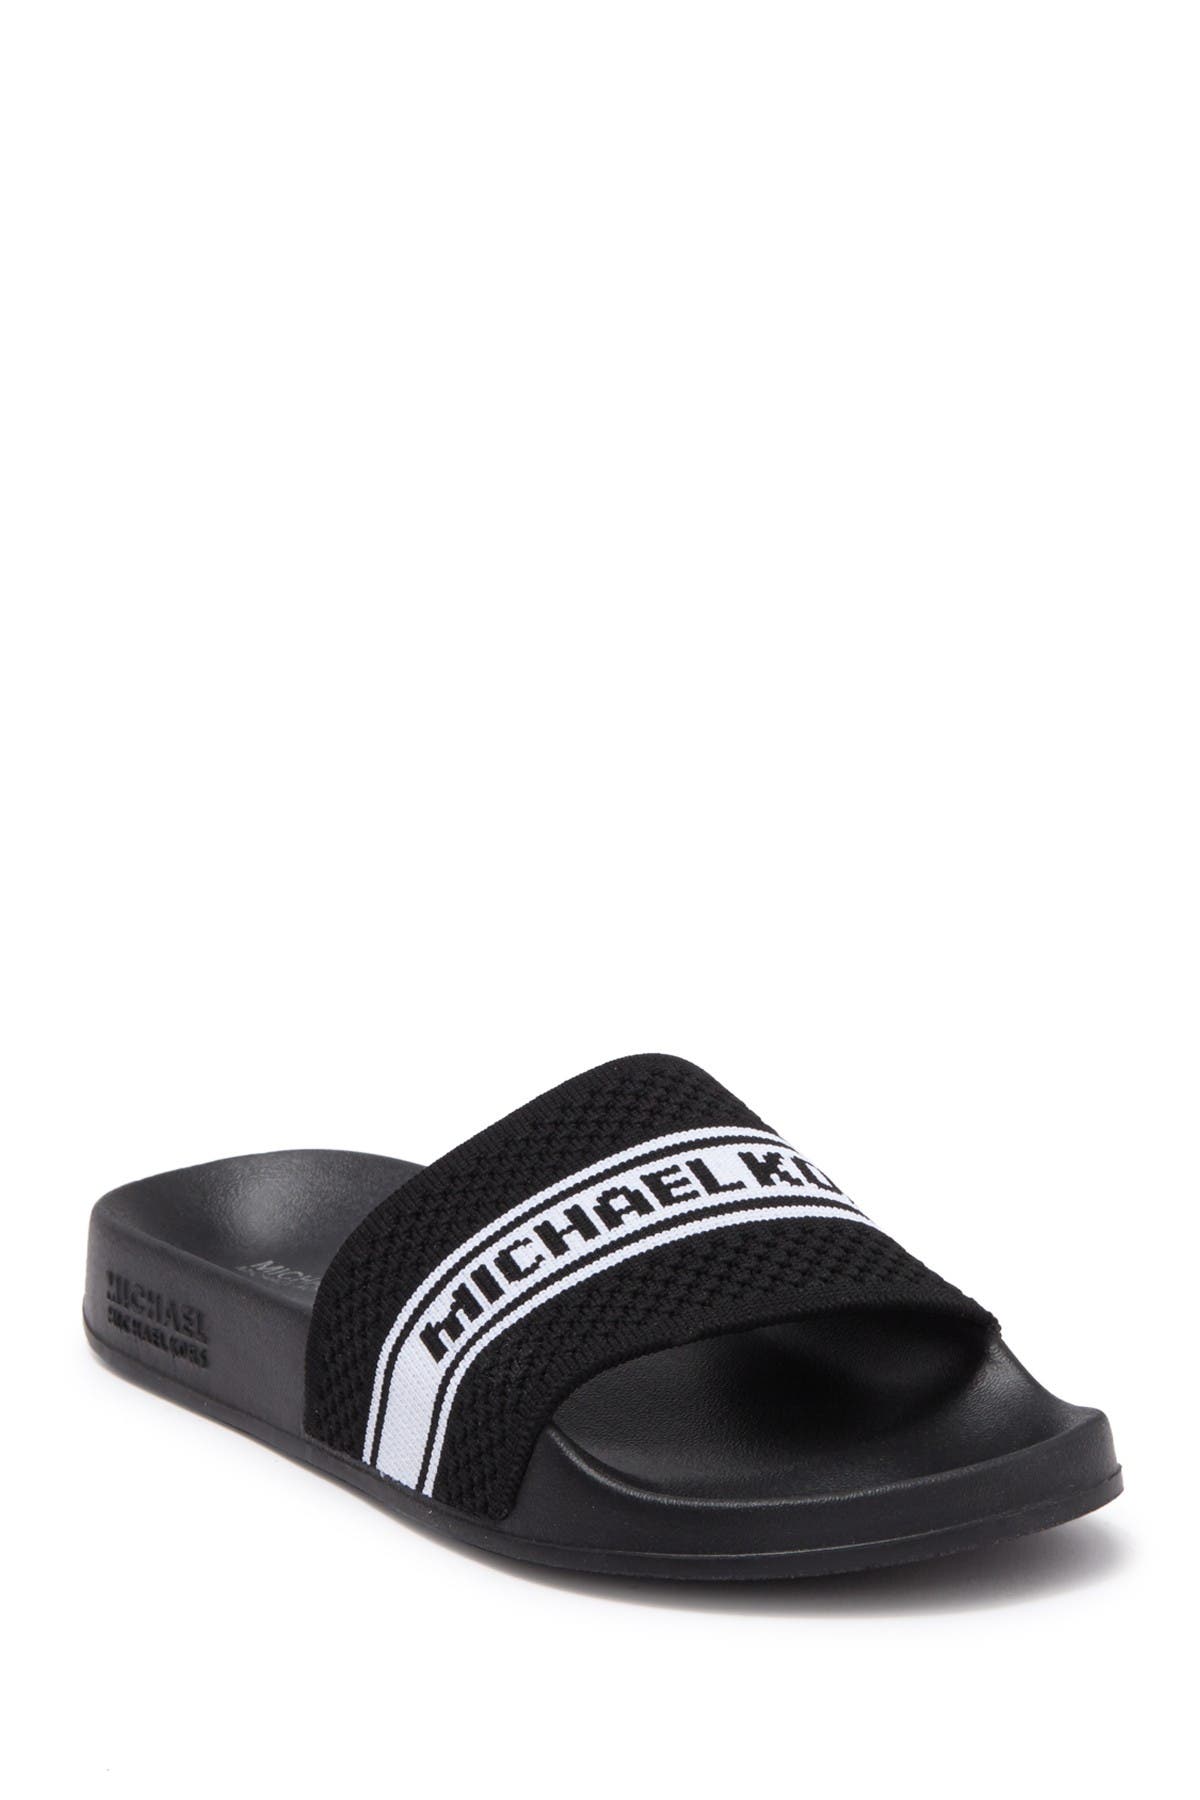 Buy Michael Kors Gilmore Pool Slide Sandals | UP TO 60% OFF